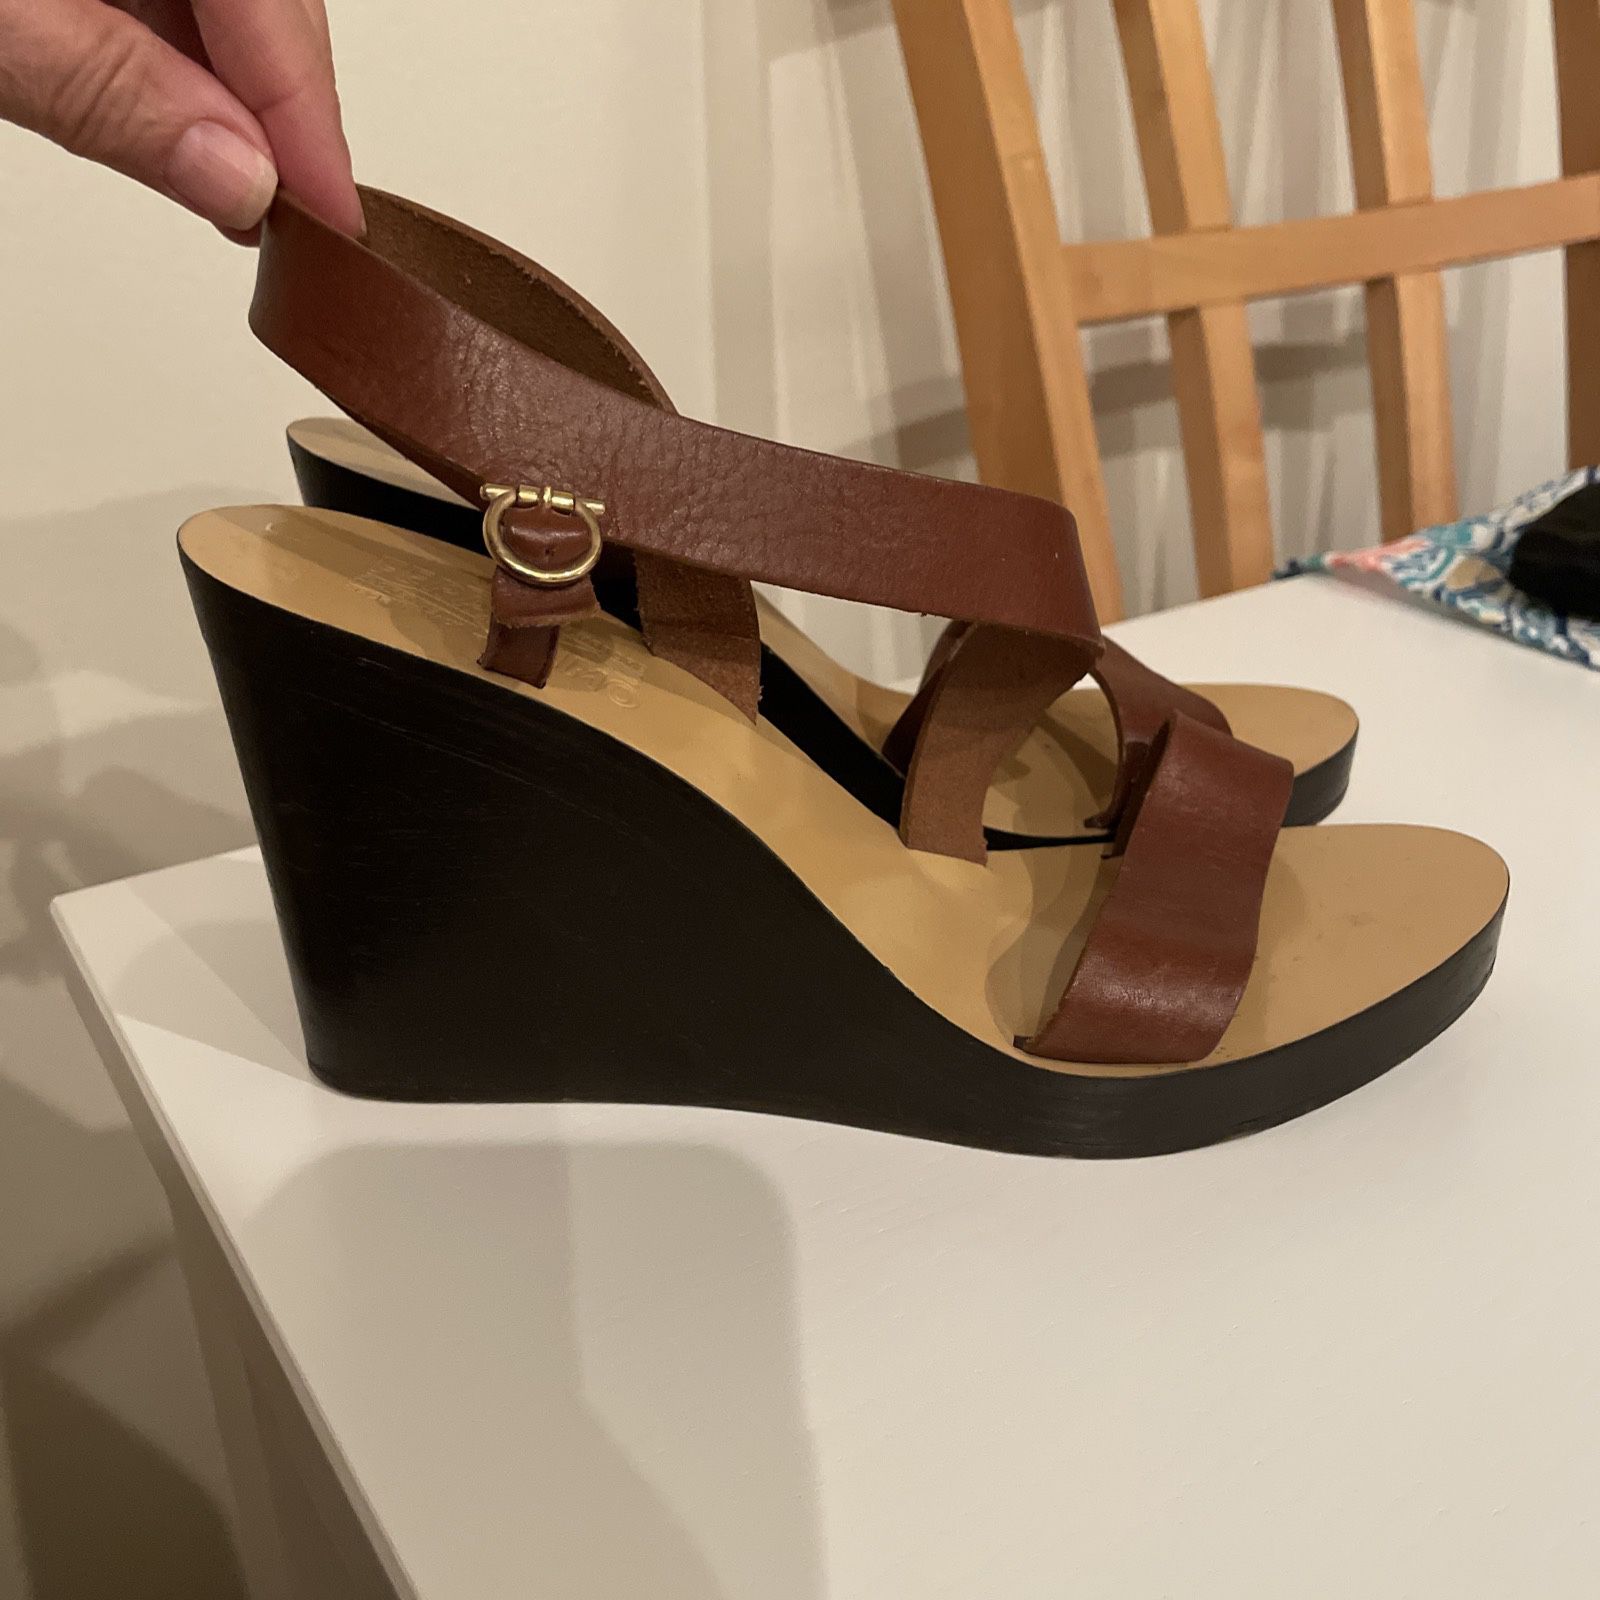 Salvatore Ferragamo Leather Wedge Sandal Size 7